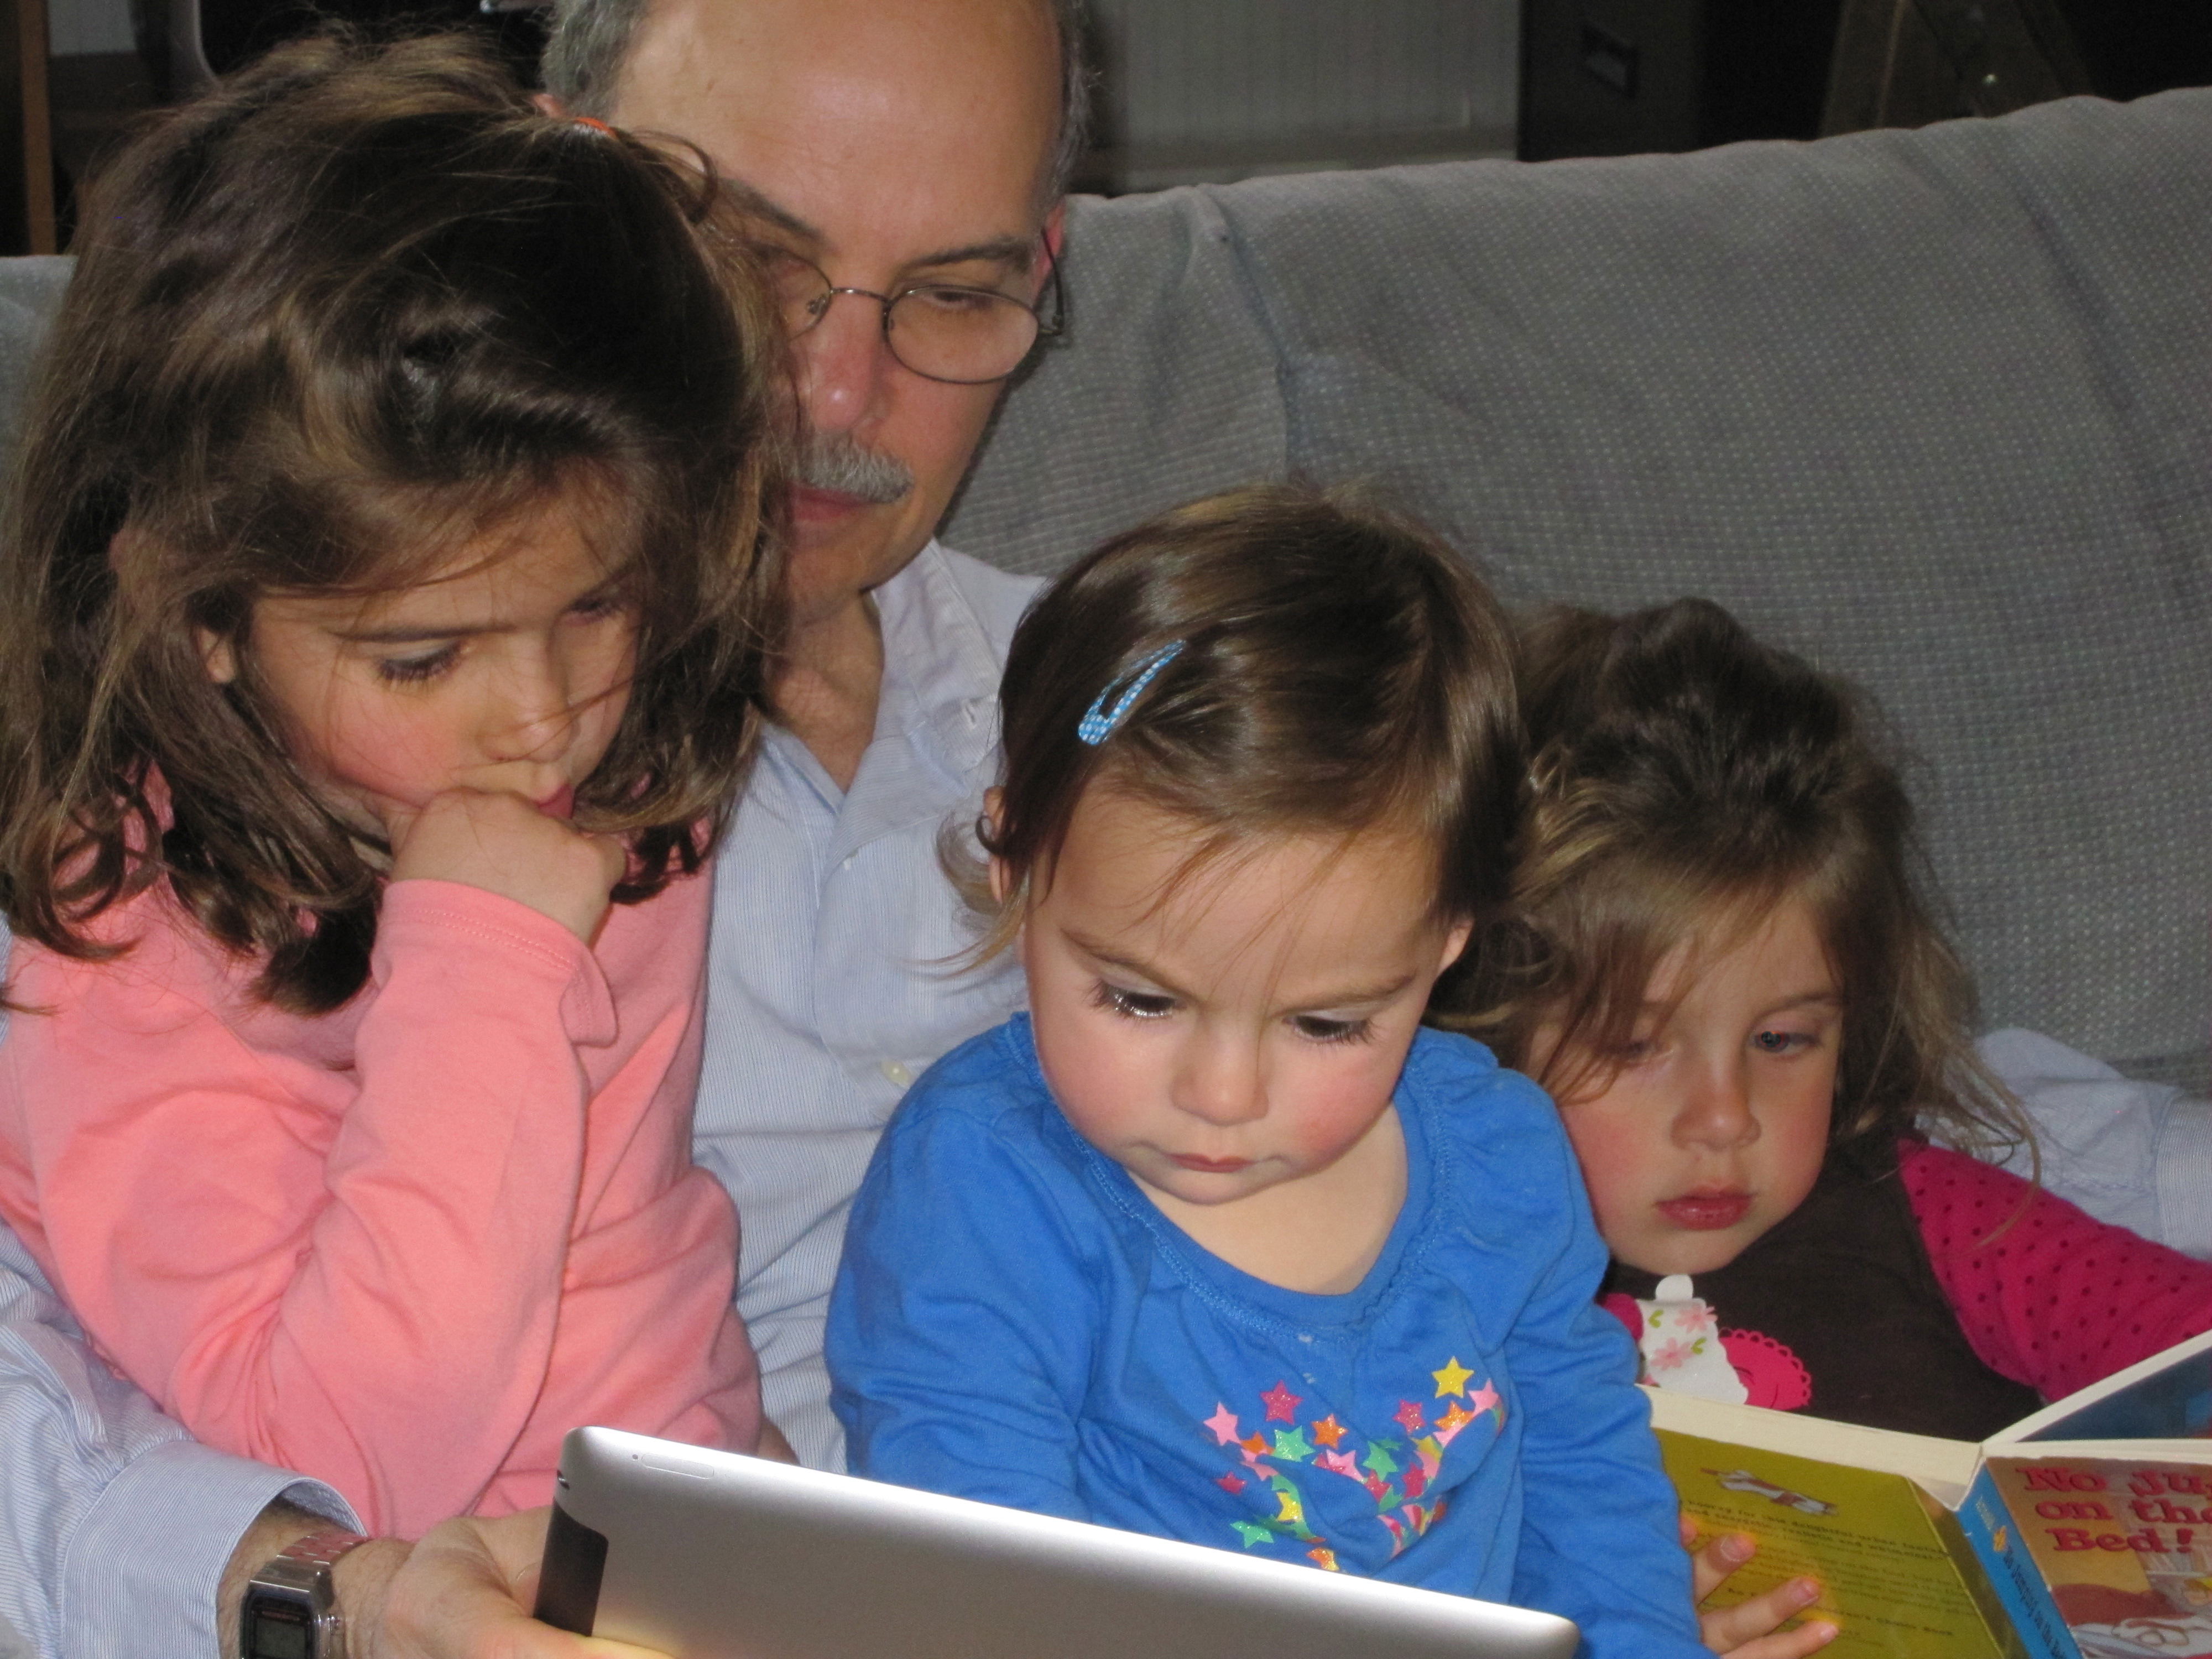 Loew reading with his grandchildren.